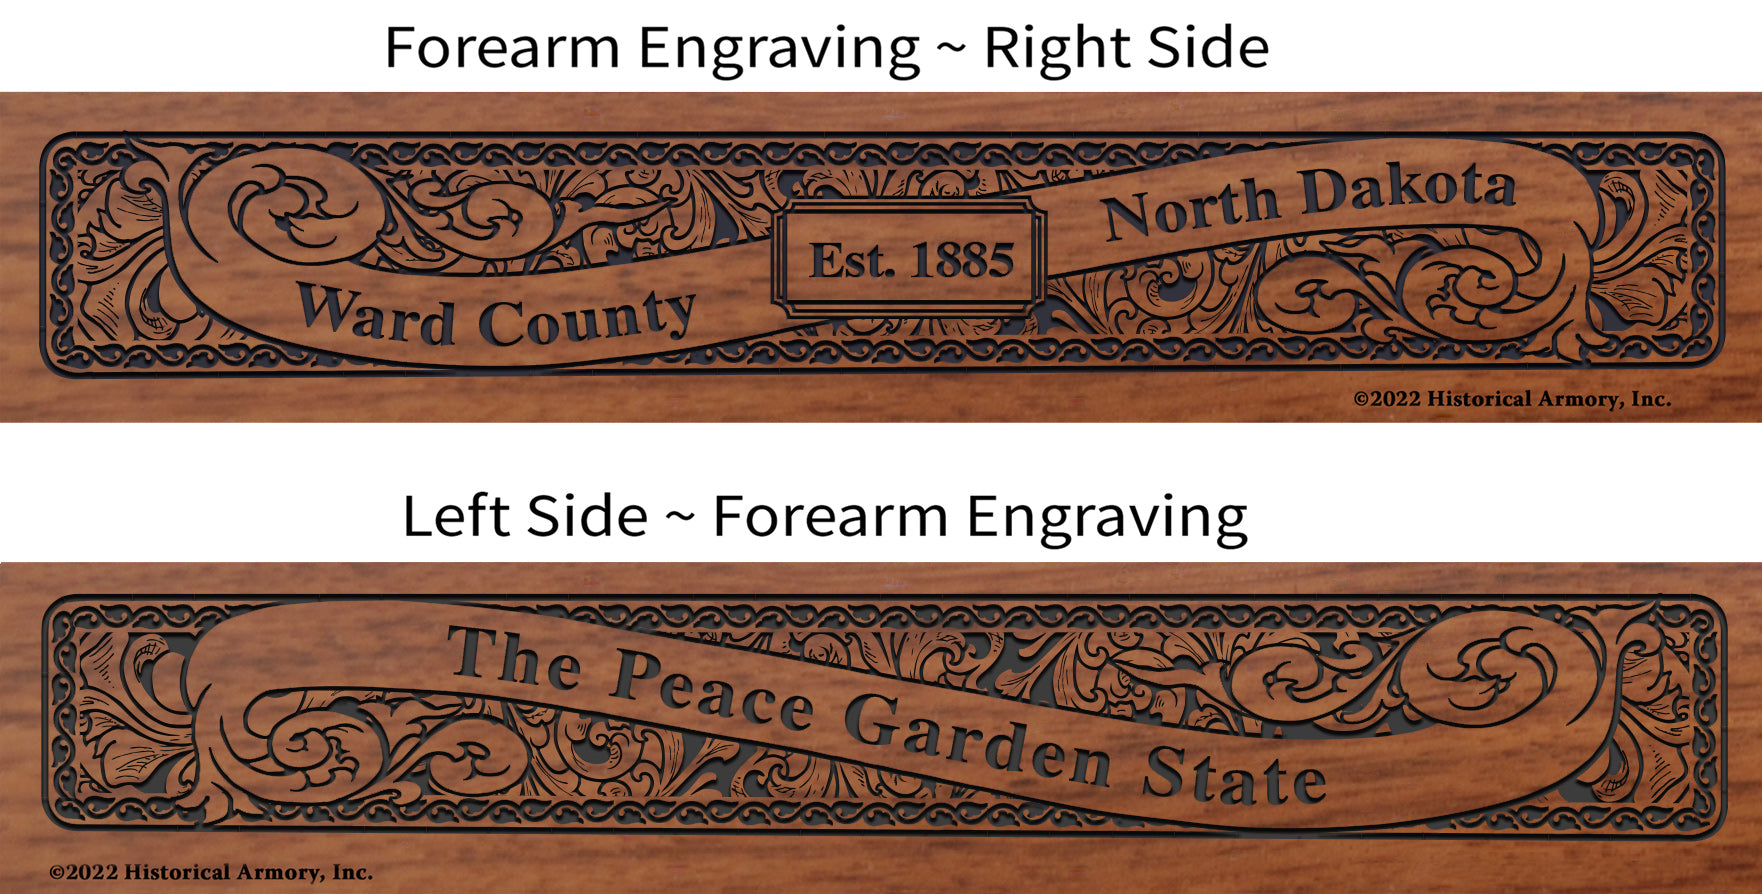 Ward County North Dakota Engraved Rifle Forearm